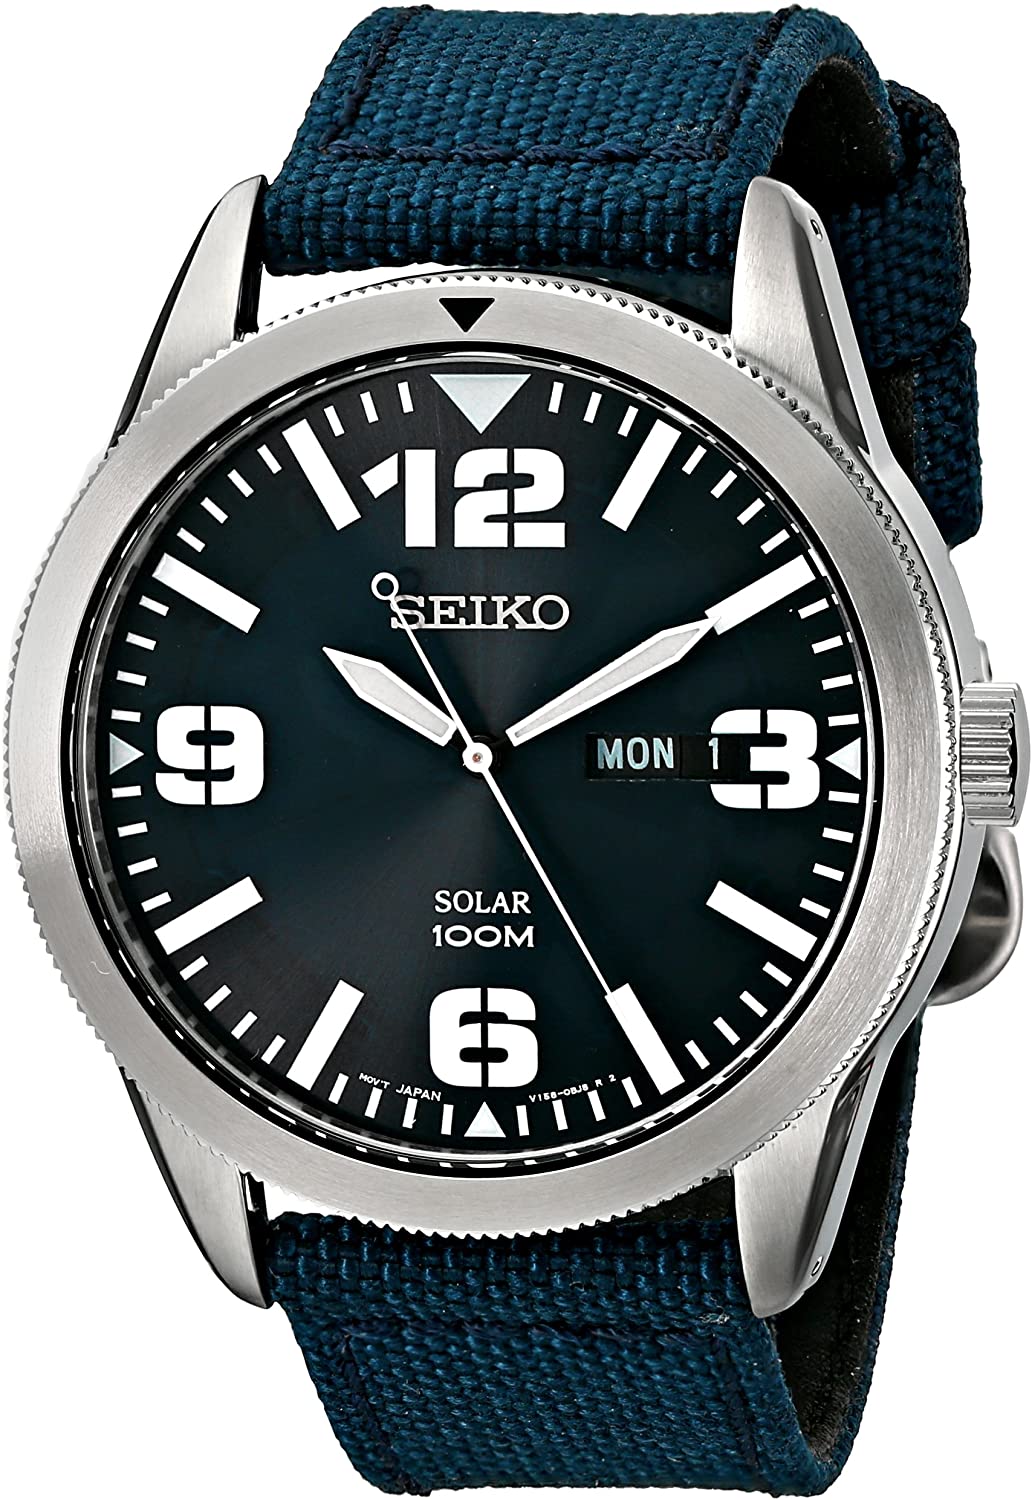 Seiko Men's Solar-Powered Watch Nylon Band SNE329 – Yare Watch